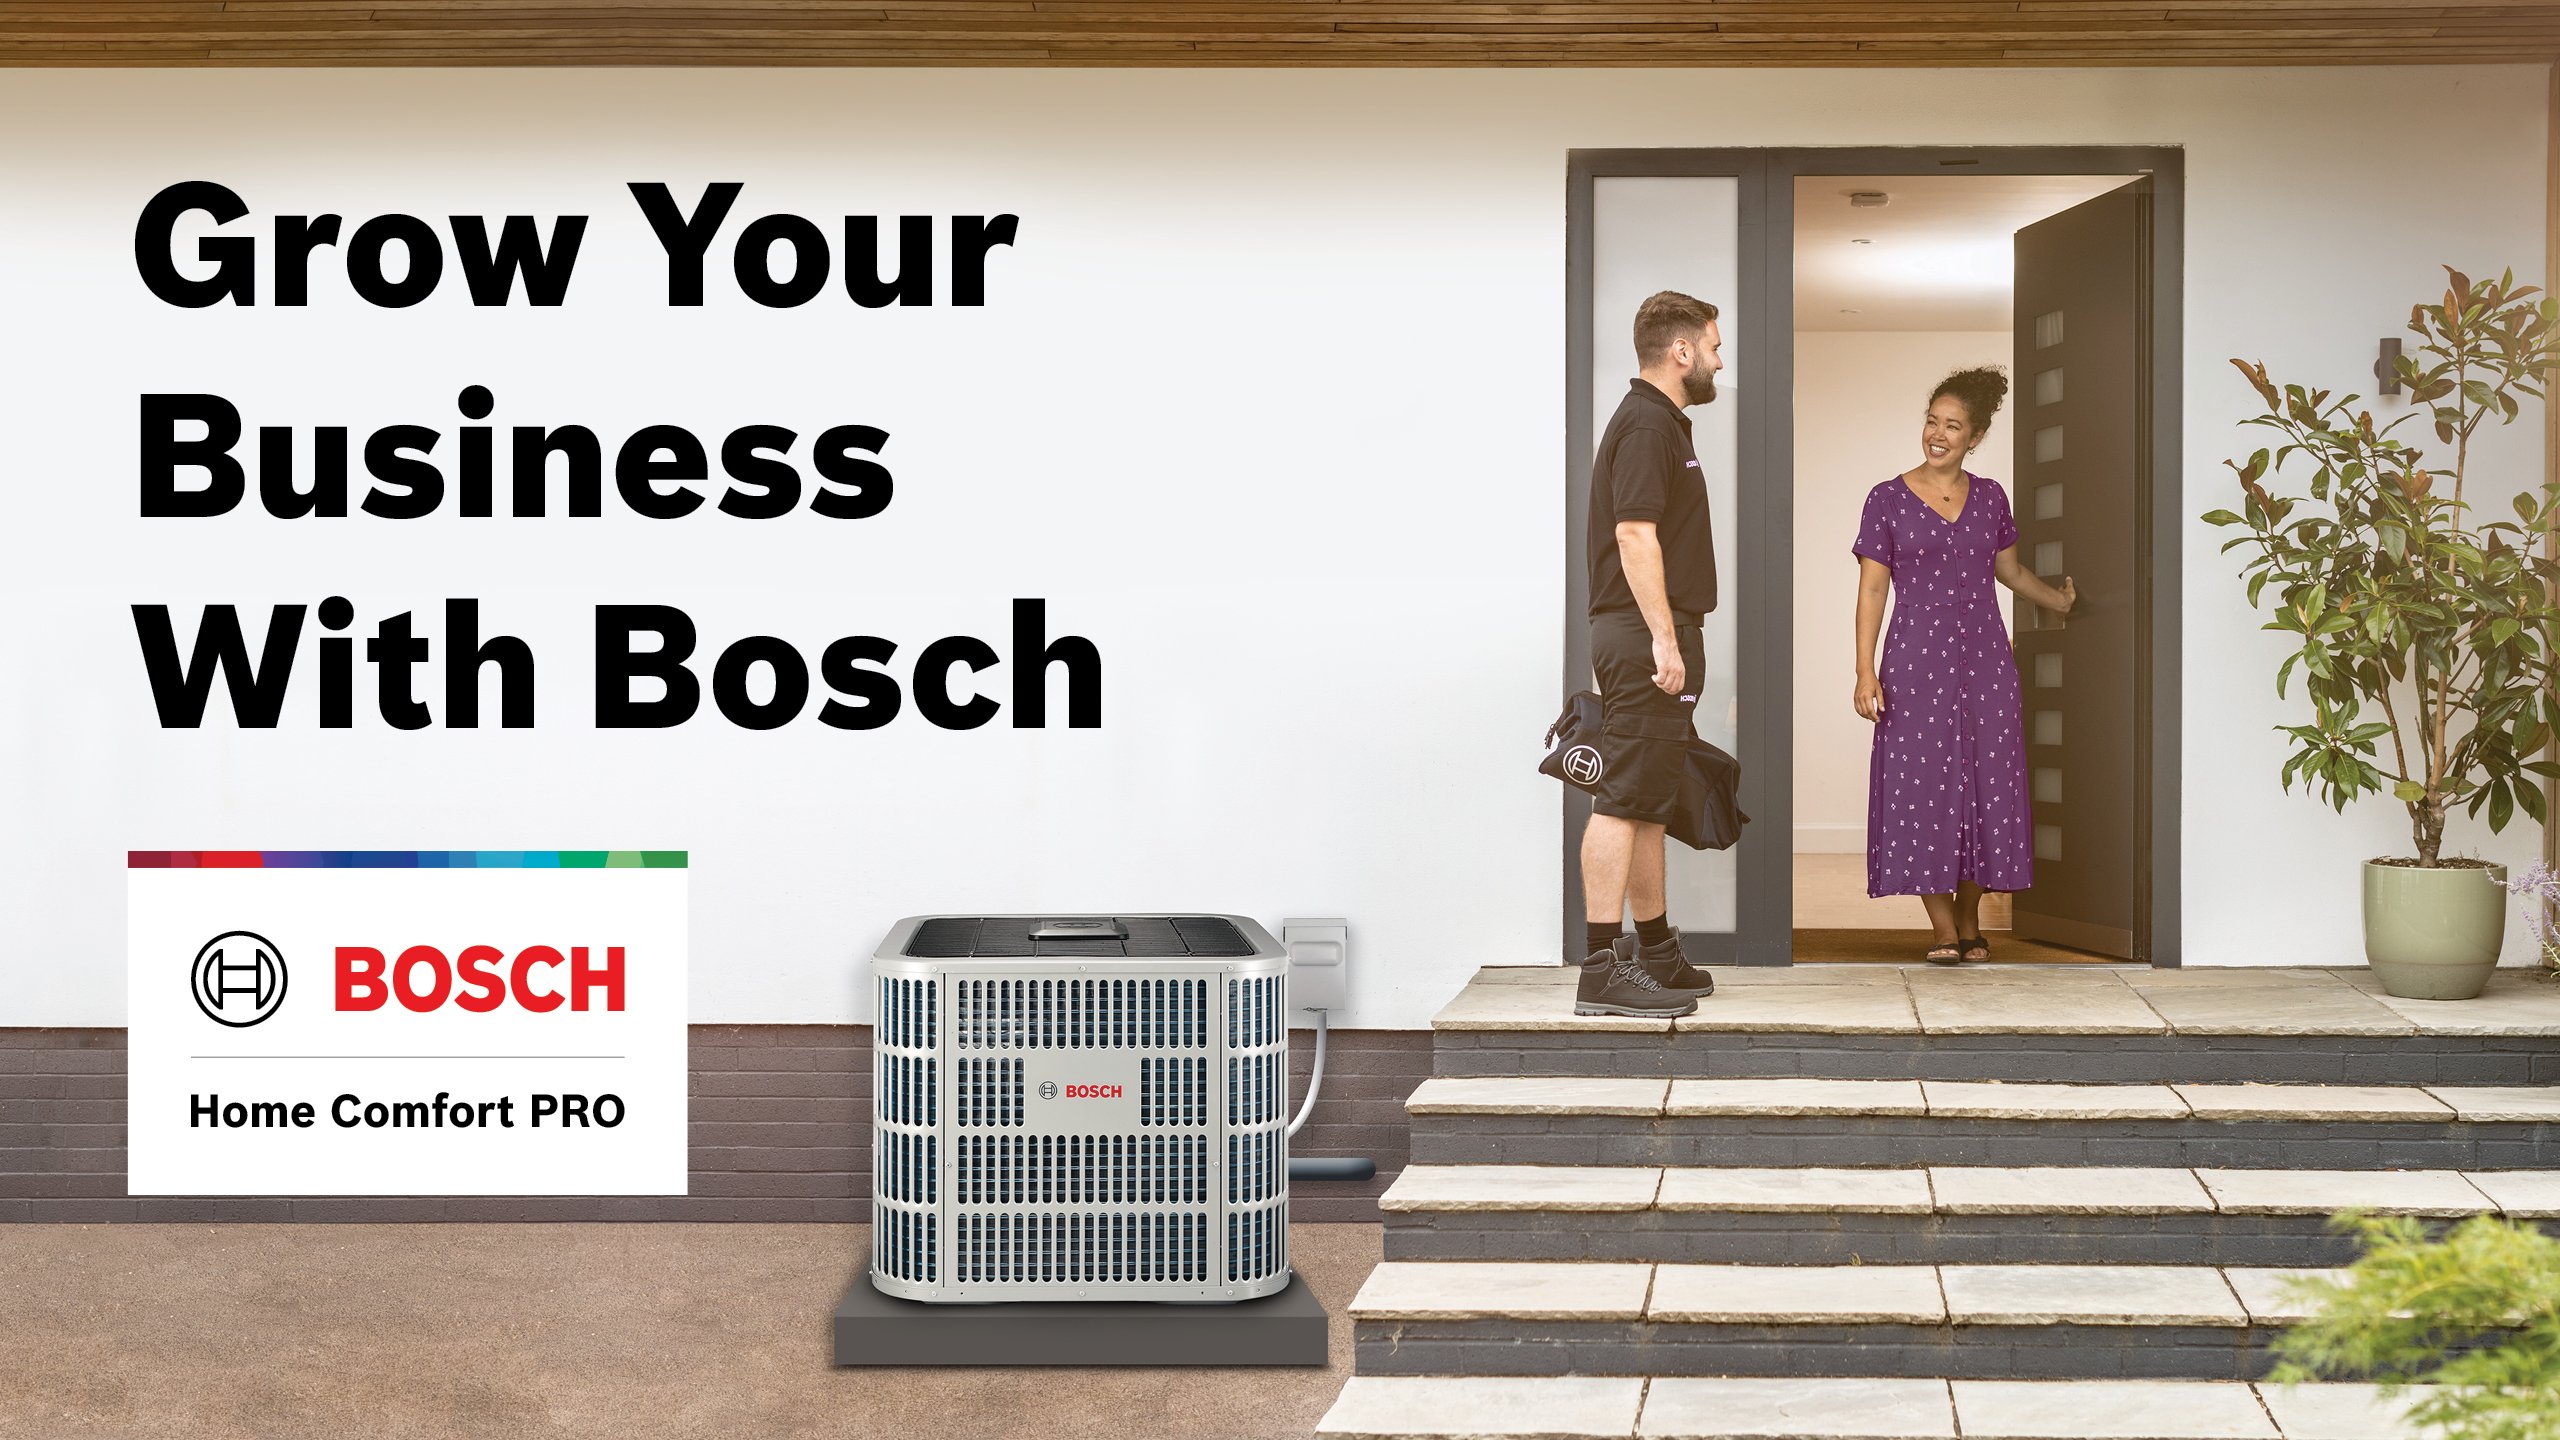 Home Program PRO Comfort Bosch